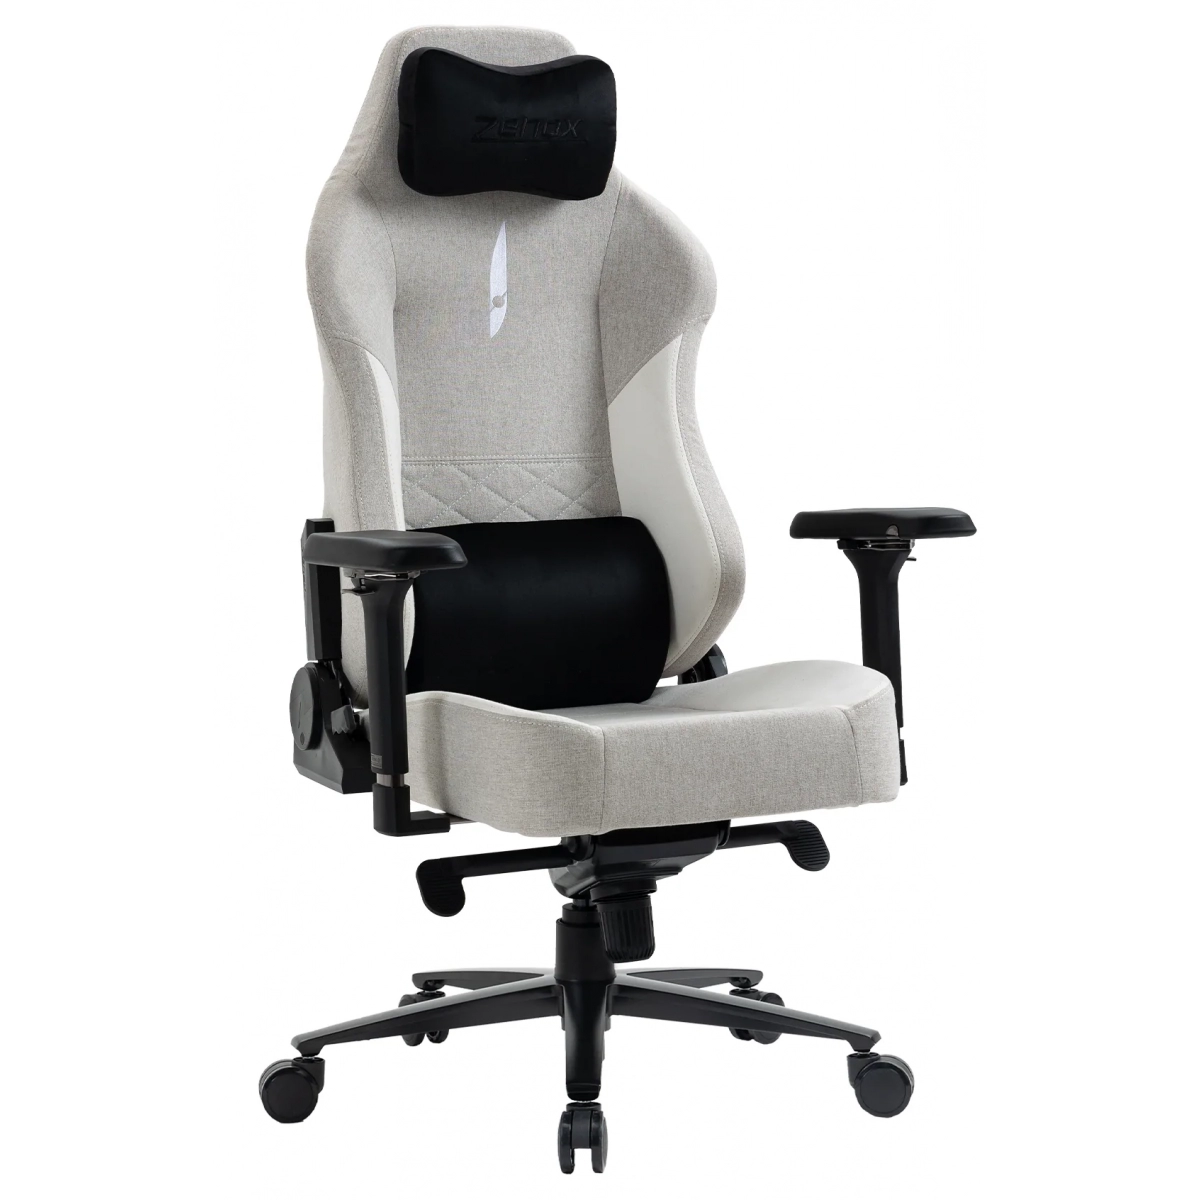 Zenox Spectre-MK2 Gaming Chair (Leather/Maroon)